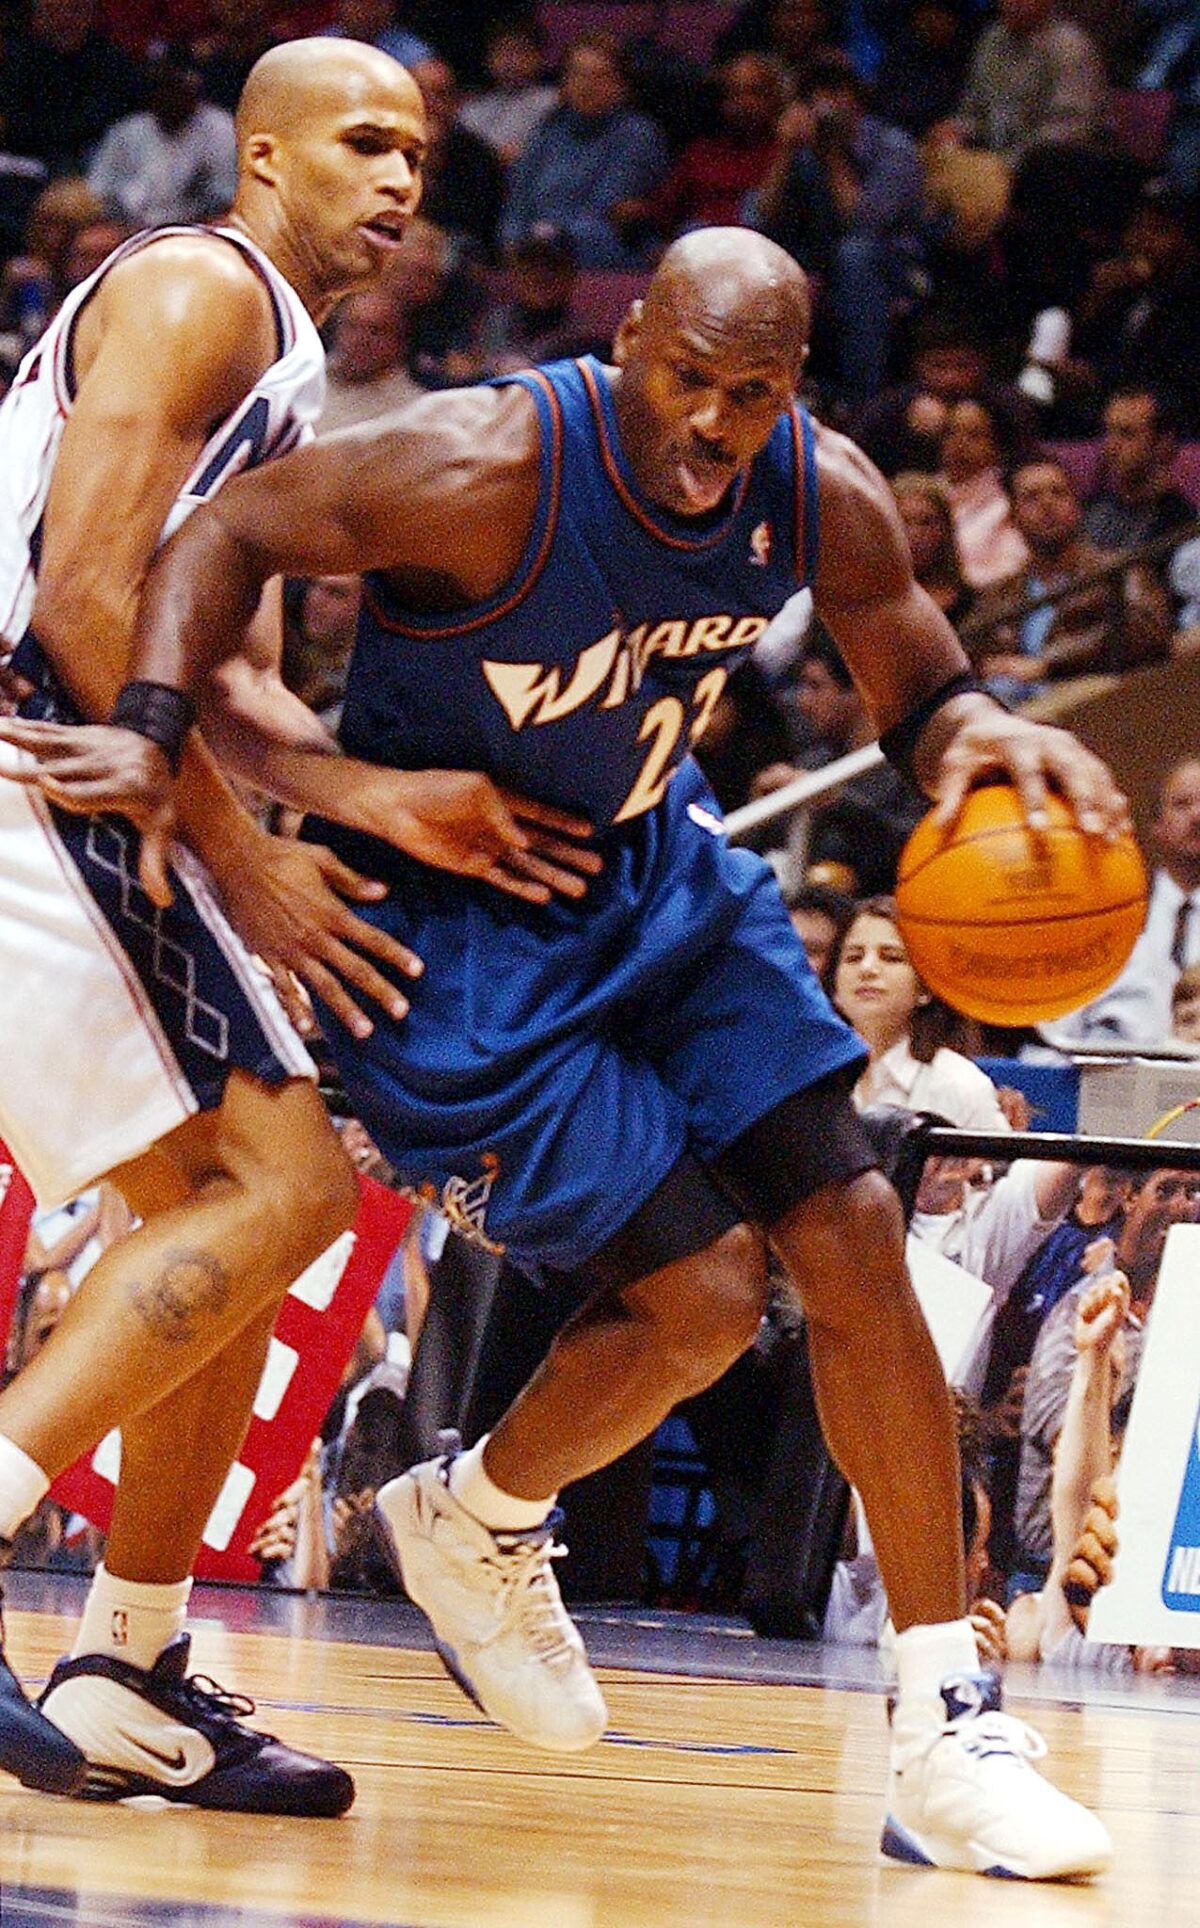 Michael Jordan wearing the Air Jordan 7 "French Blue" Retro playing for the Washington Wizards in 2002